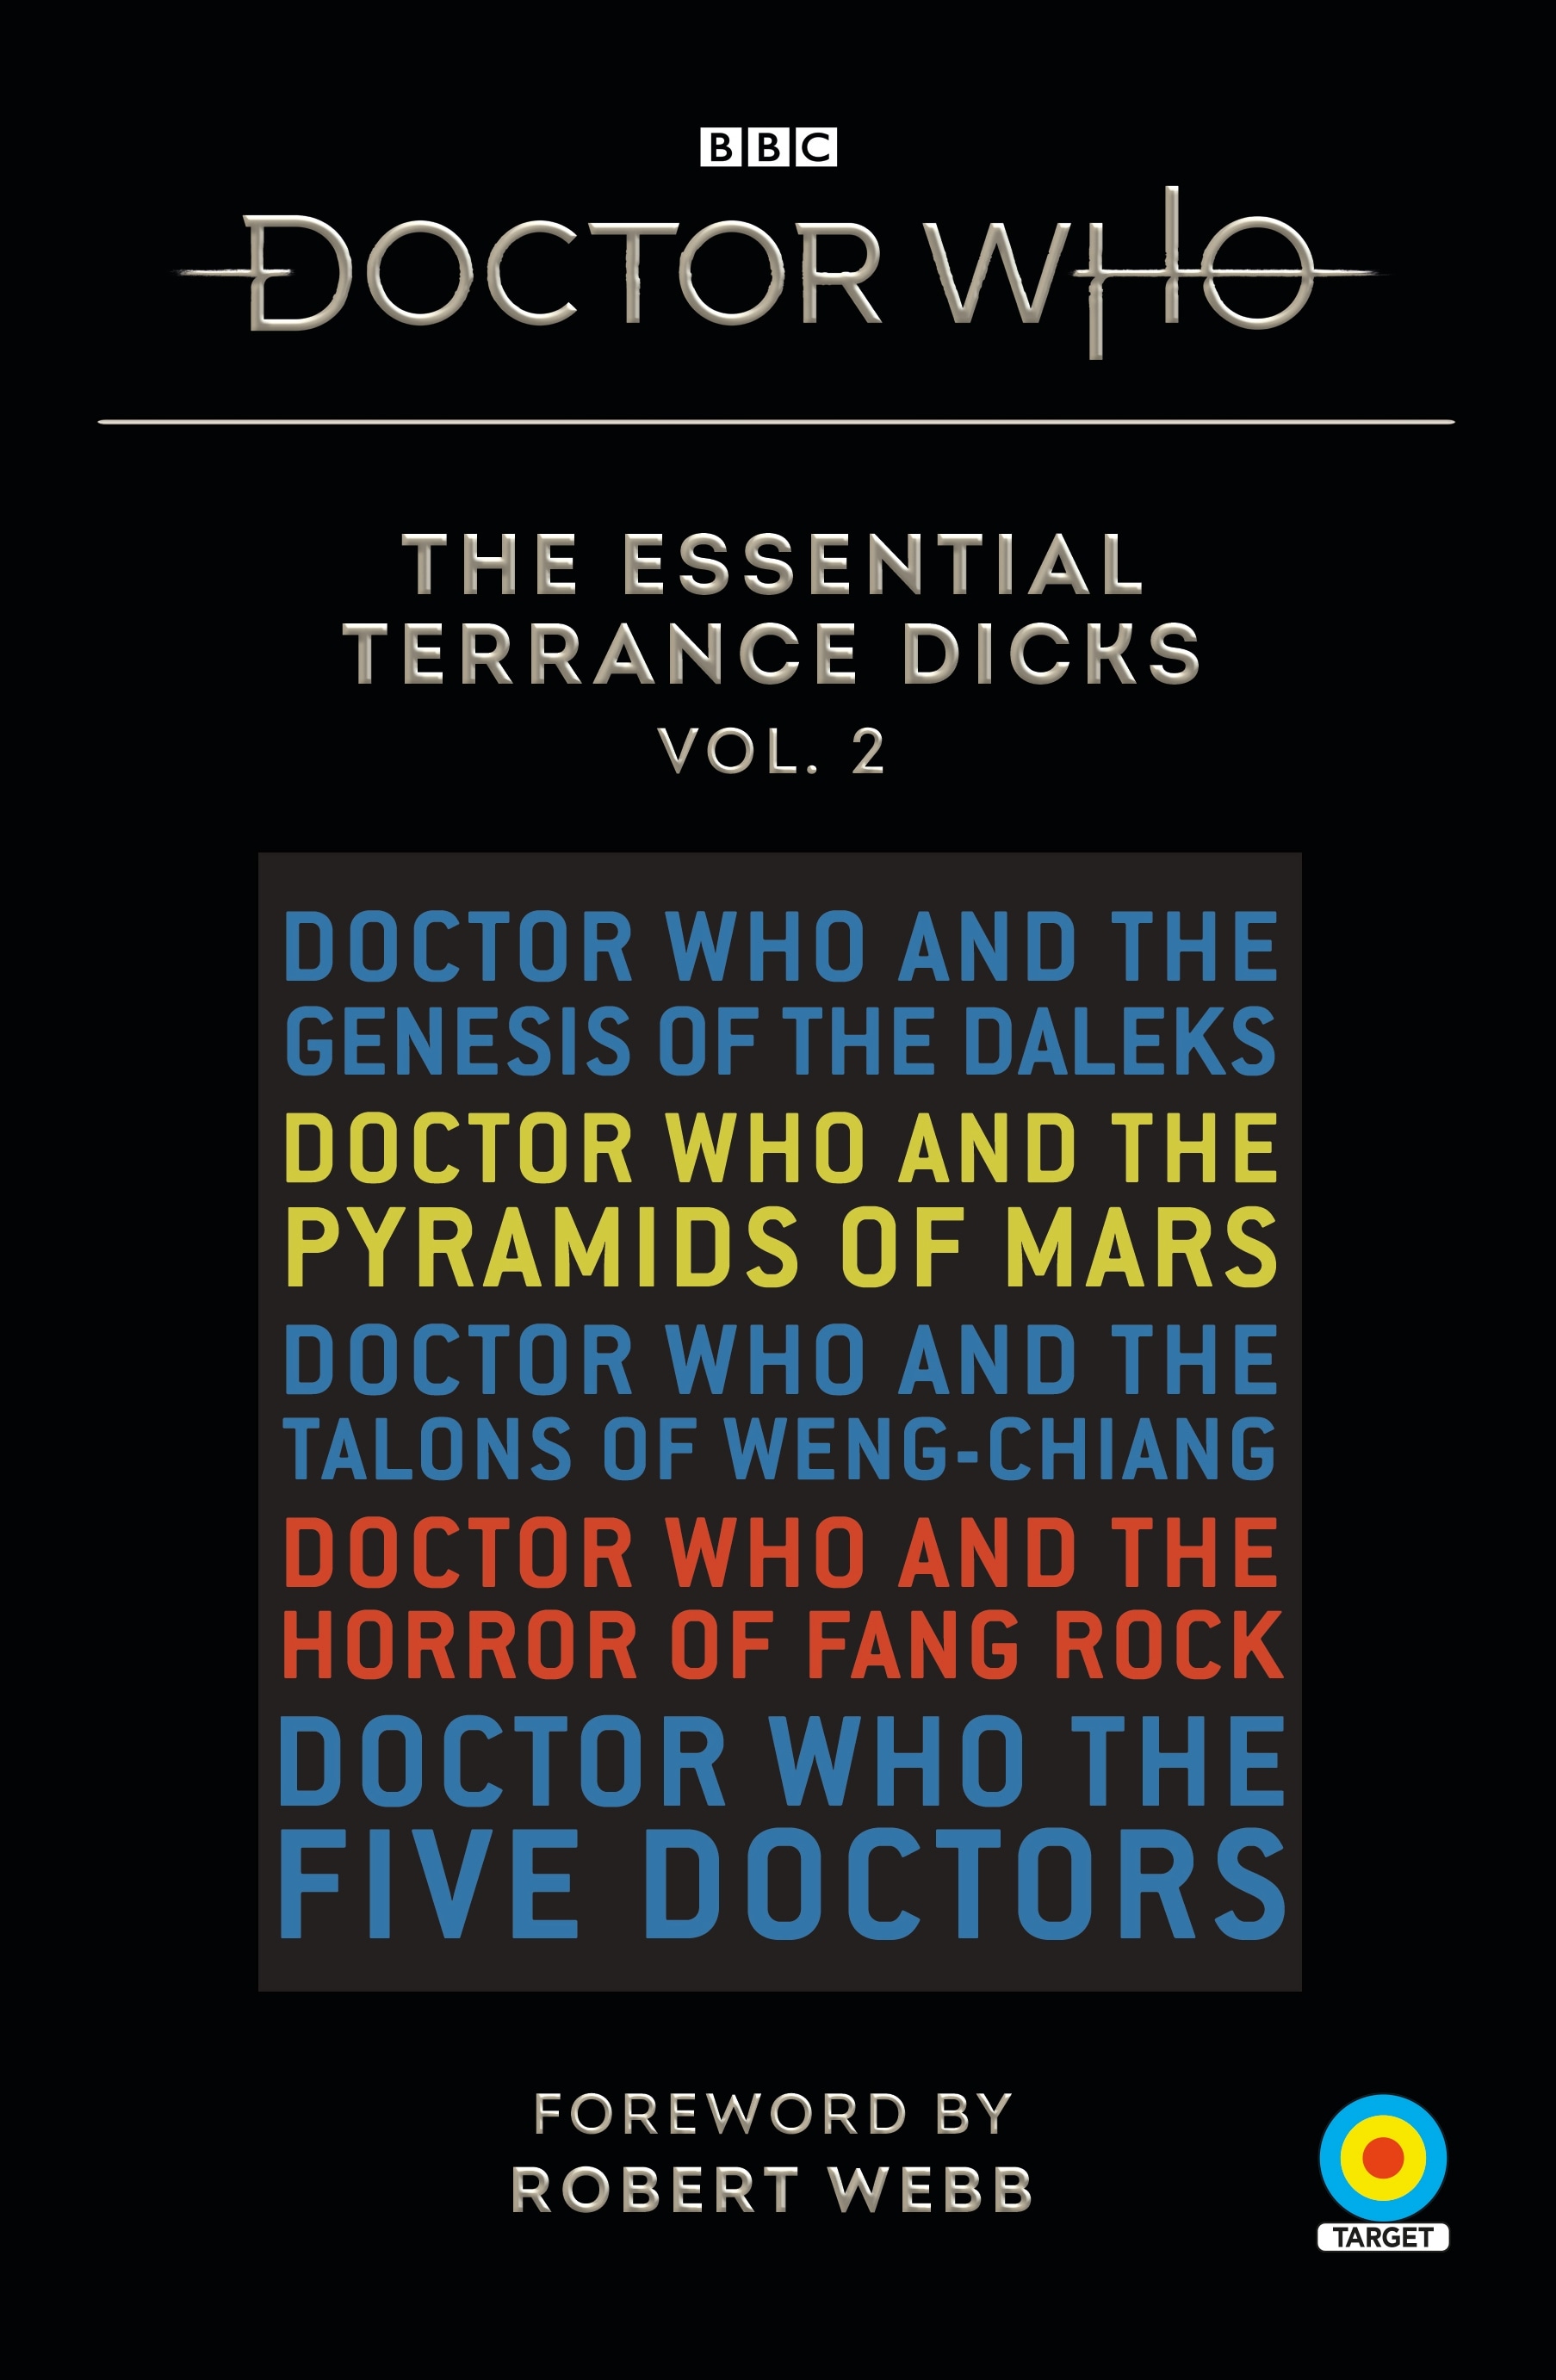 Book “The Essential Terrance Dicks Volume 2” by Terrance Dicks — August 26, 2021